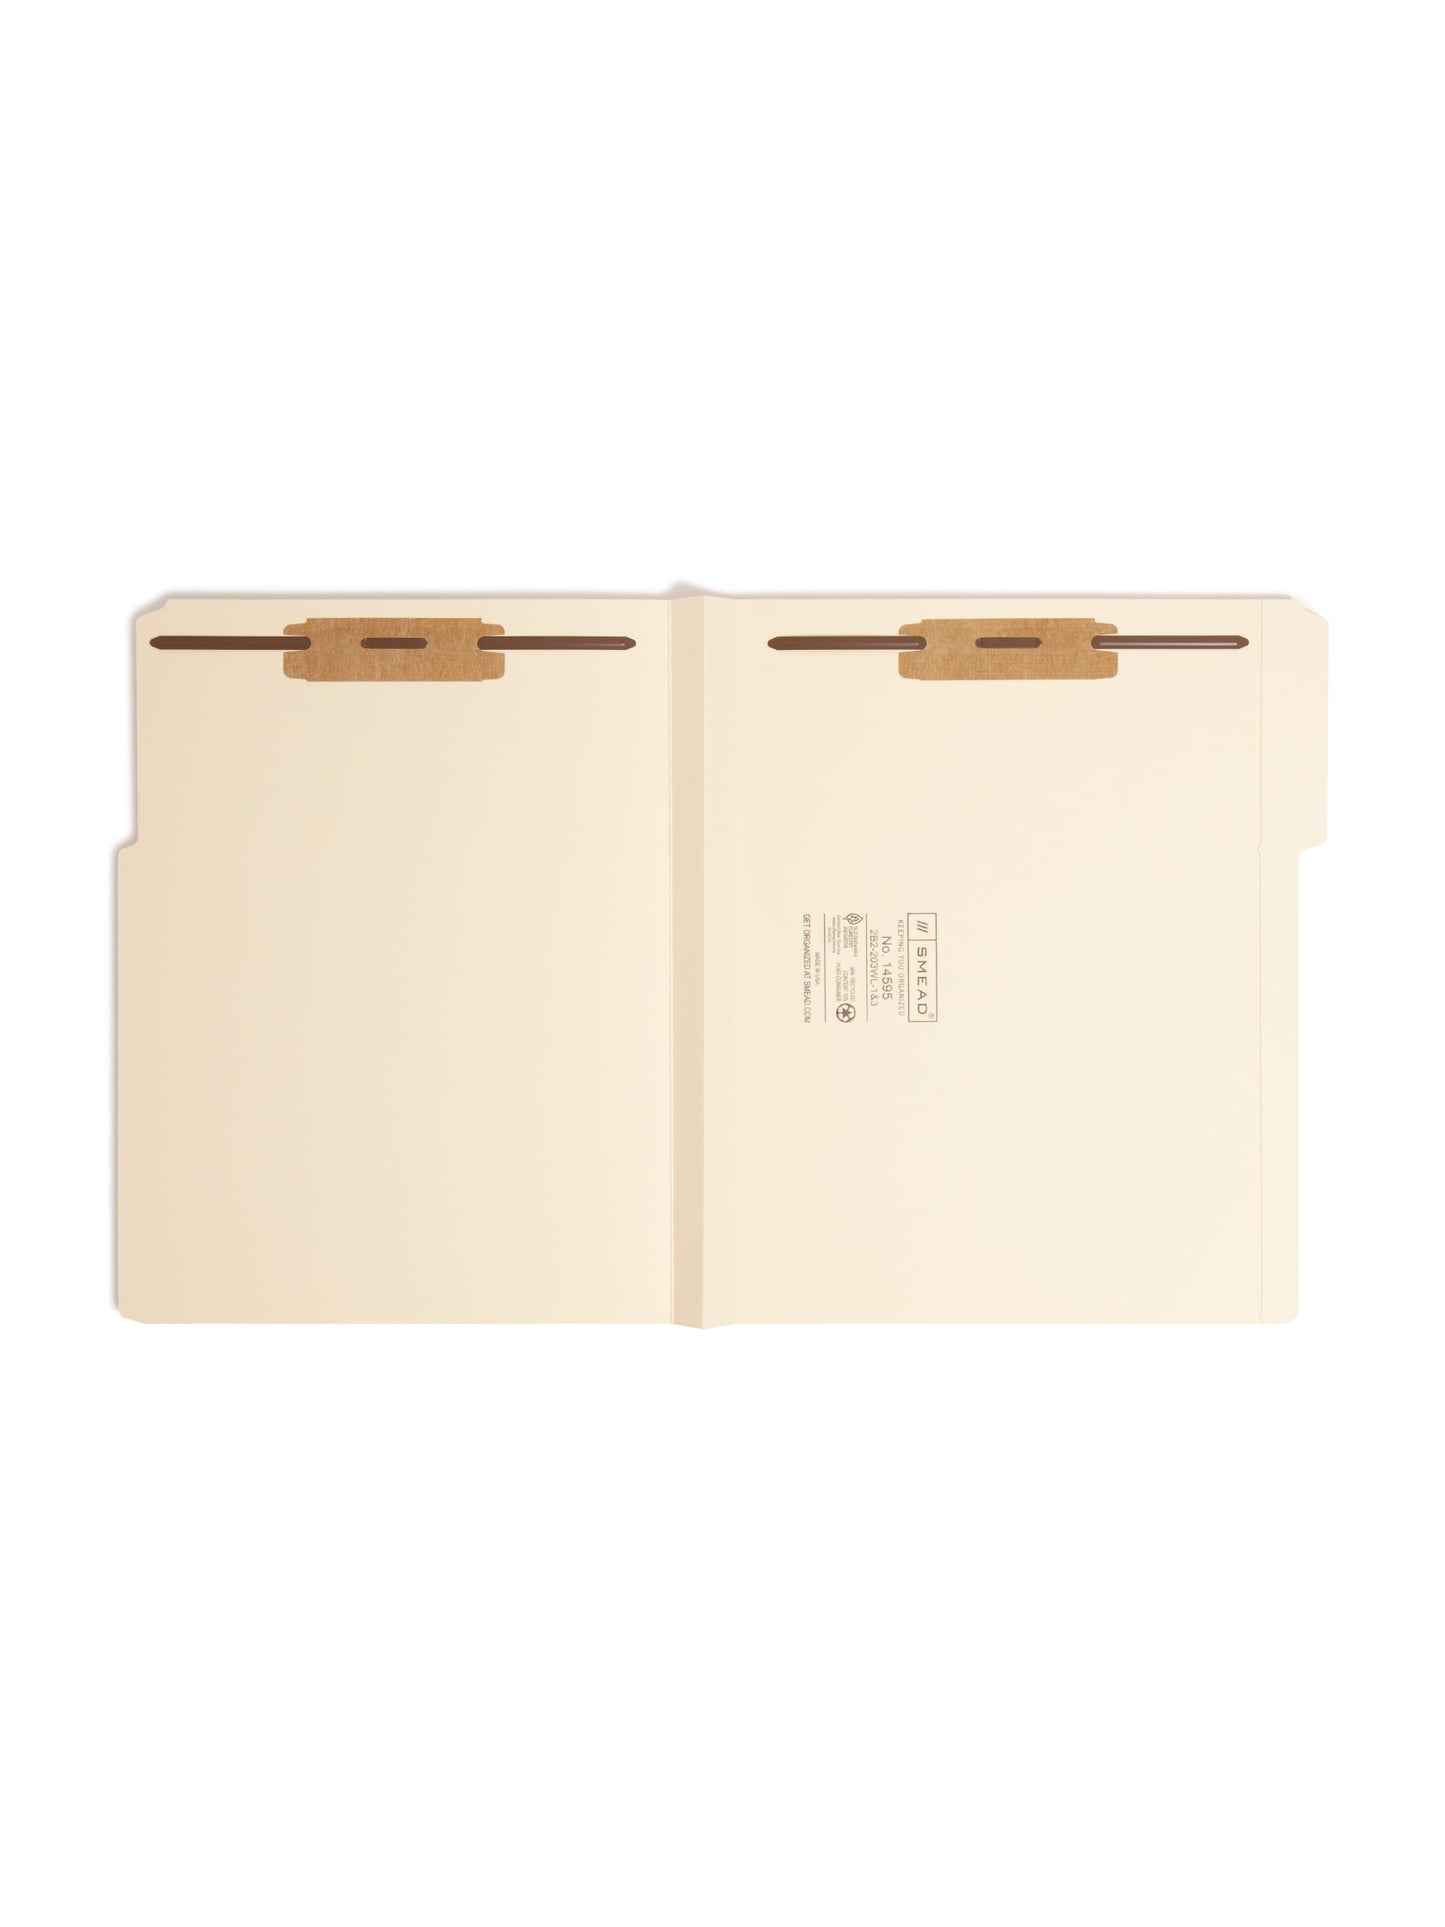 Reinforced Tab Fastener File Folders, 1 1/2 inch Expansion, 1/3-Cut Tab, Manila Color, Letter Size, Set of 50, 086486145954